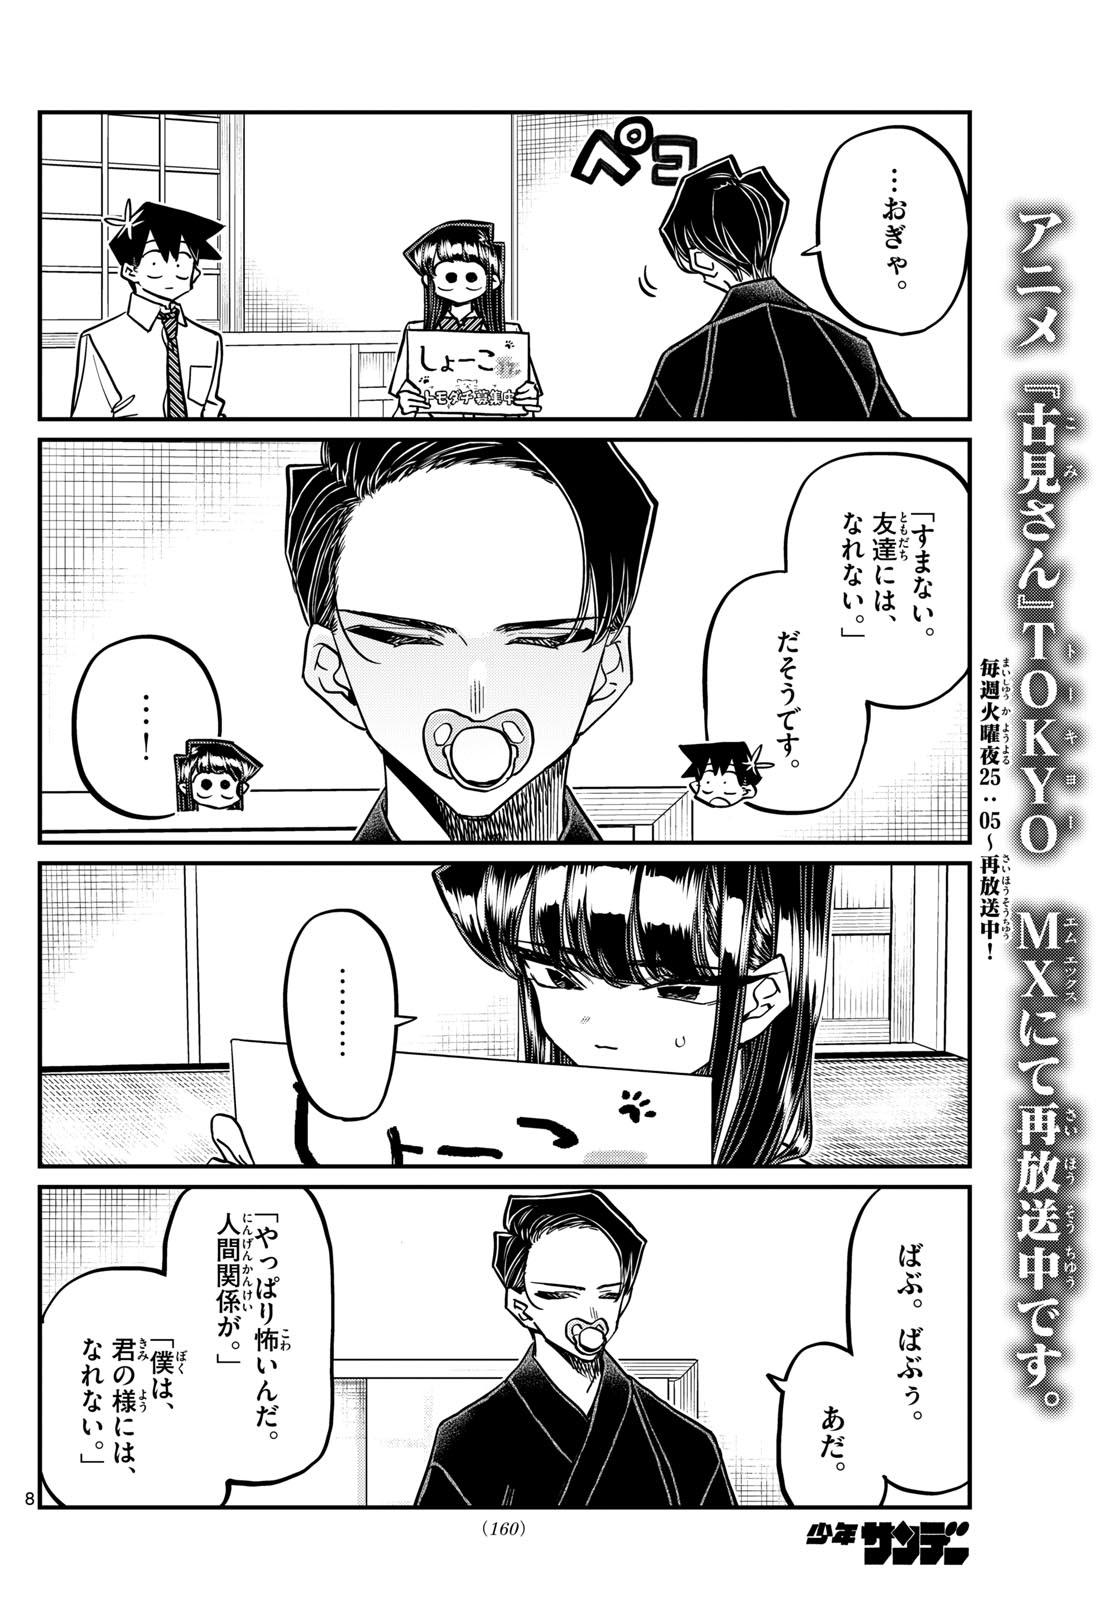 Komi-san wa Komyushou Desu. 418 – Türkçe Manga Oku – Tempest Manga